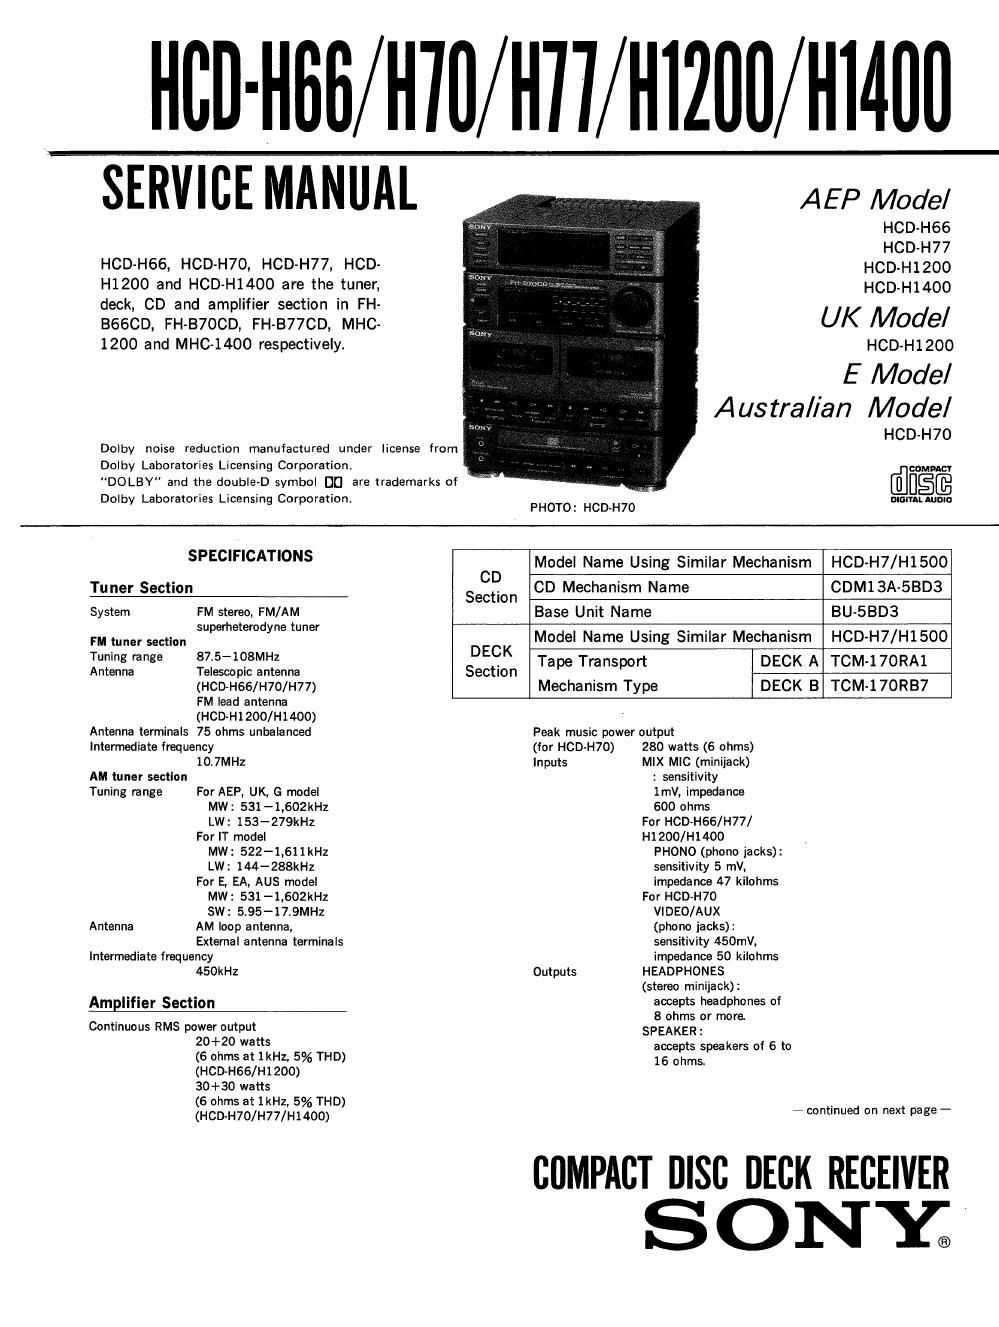 sony hcd h 77 service manual